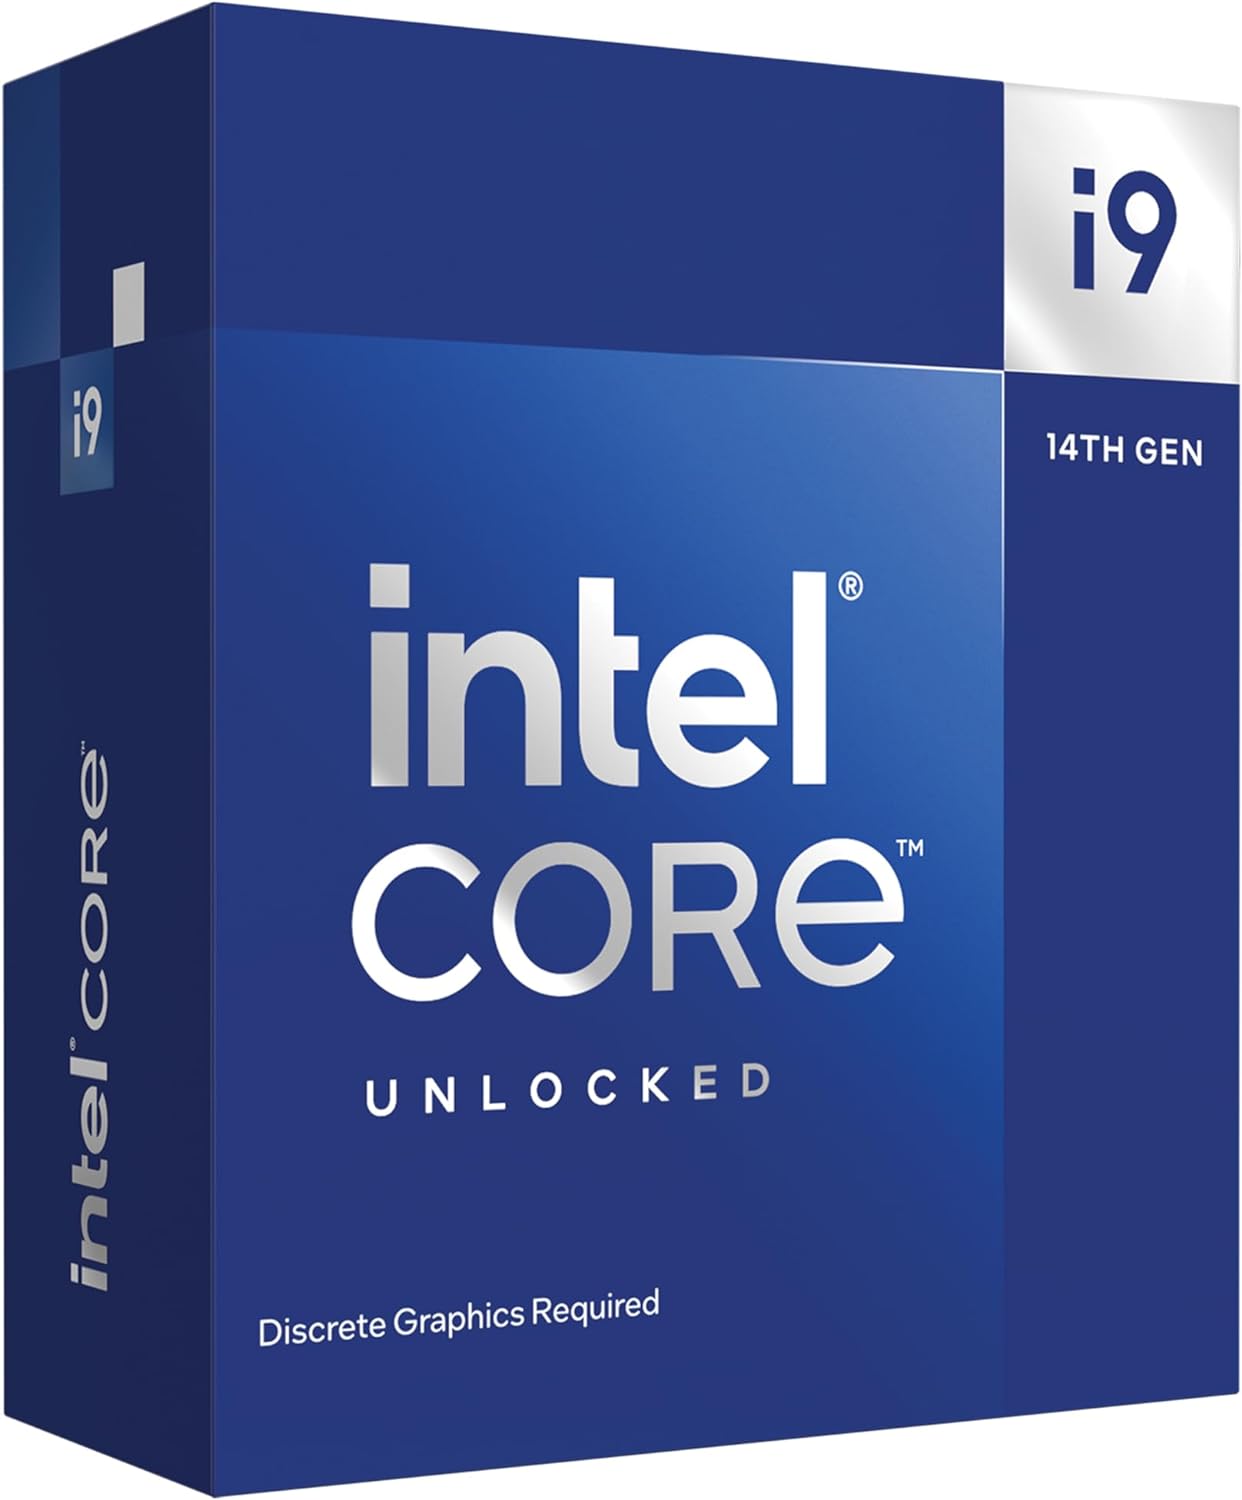 Intel Core i9-14900KF CPU in its retail box.